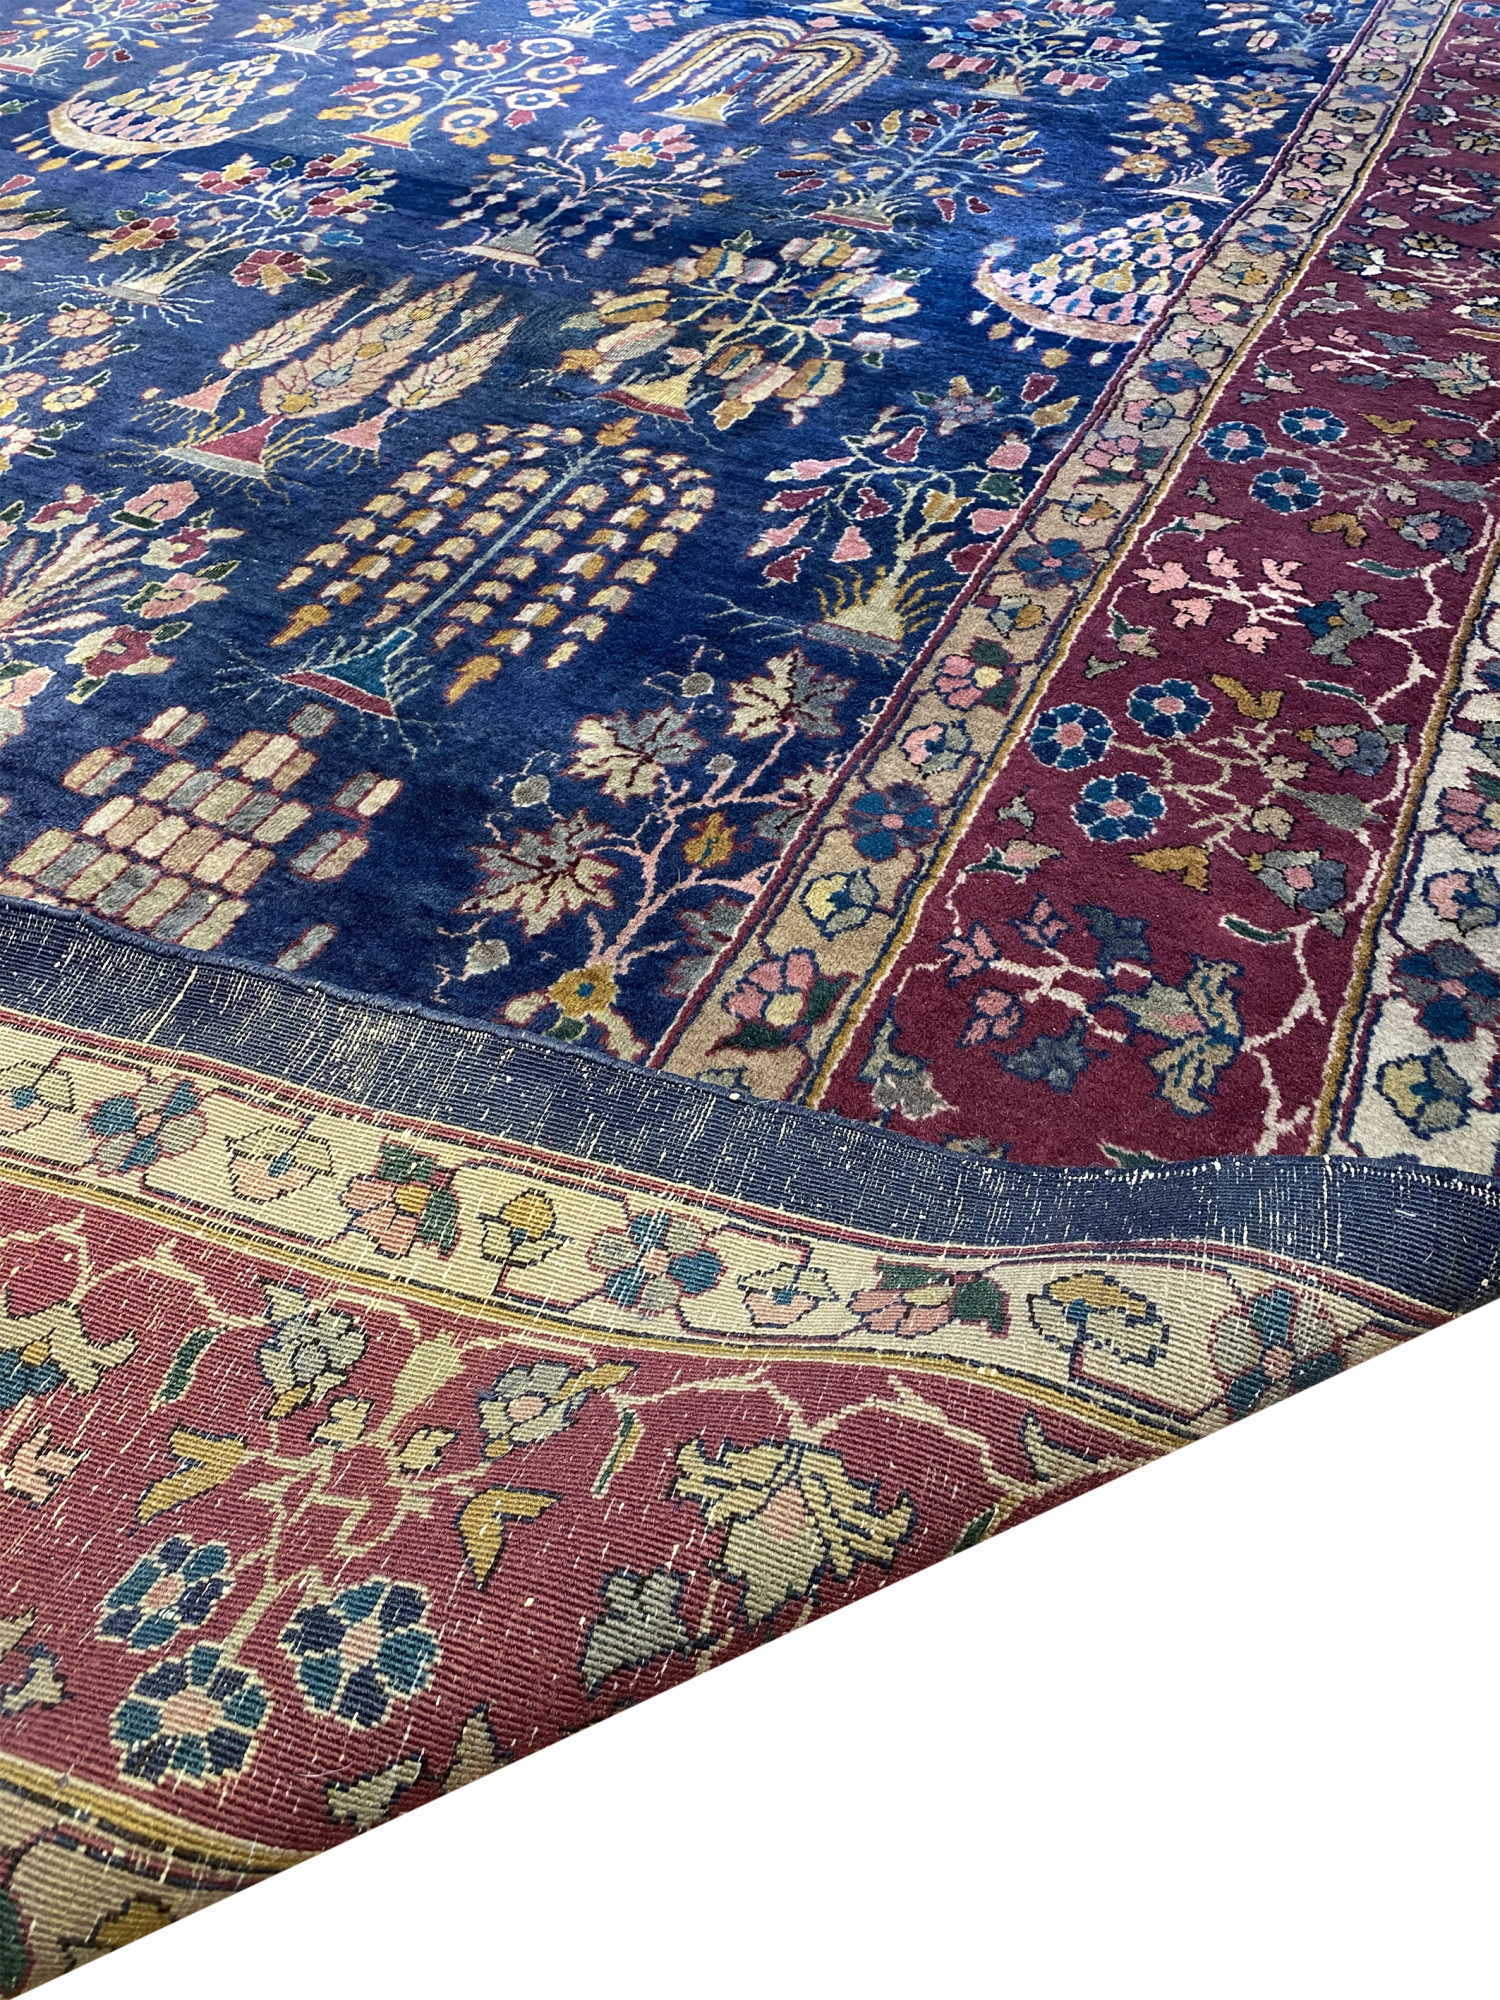 Antique Turkish Sparta 10' x 14' - Shabahang Royal Carpet